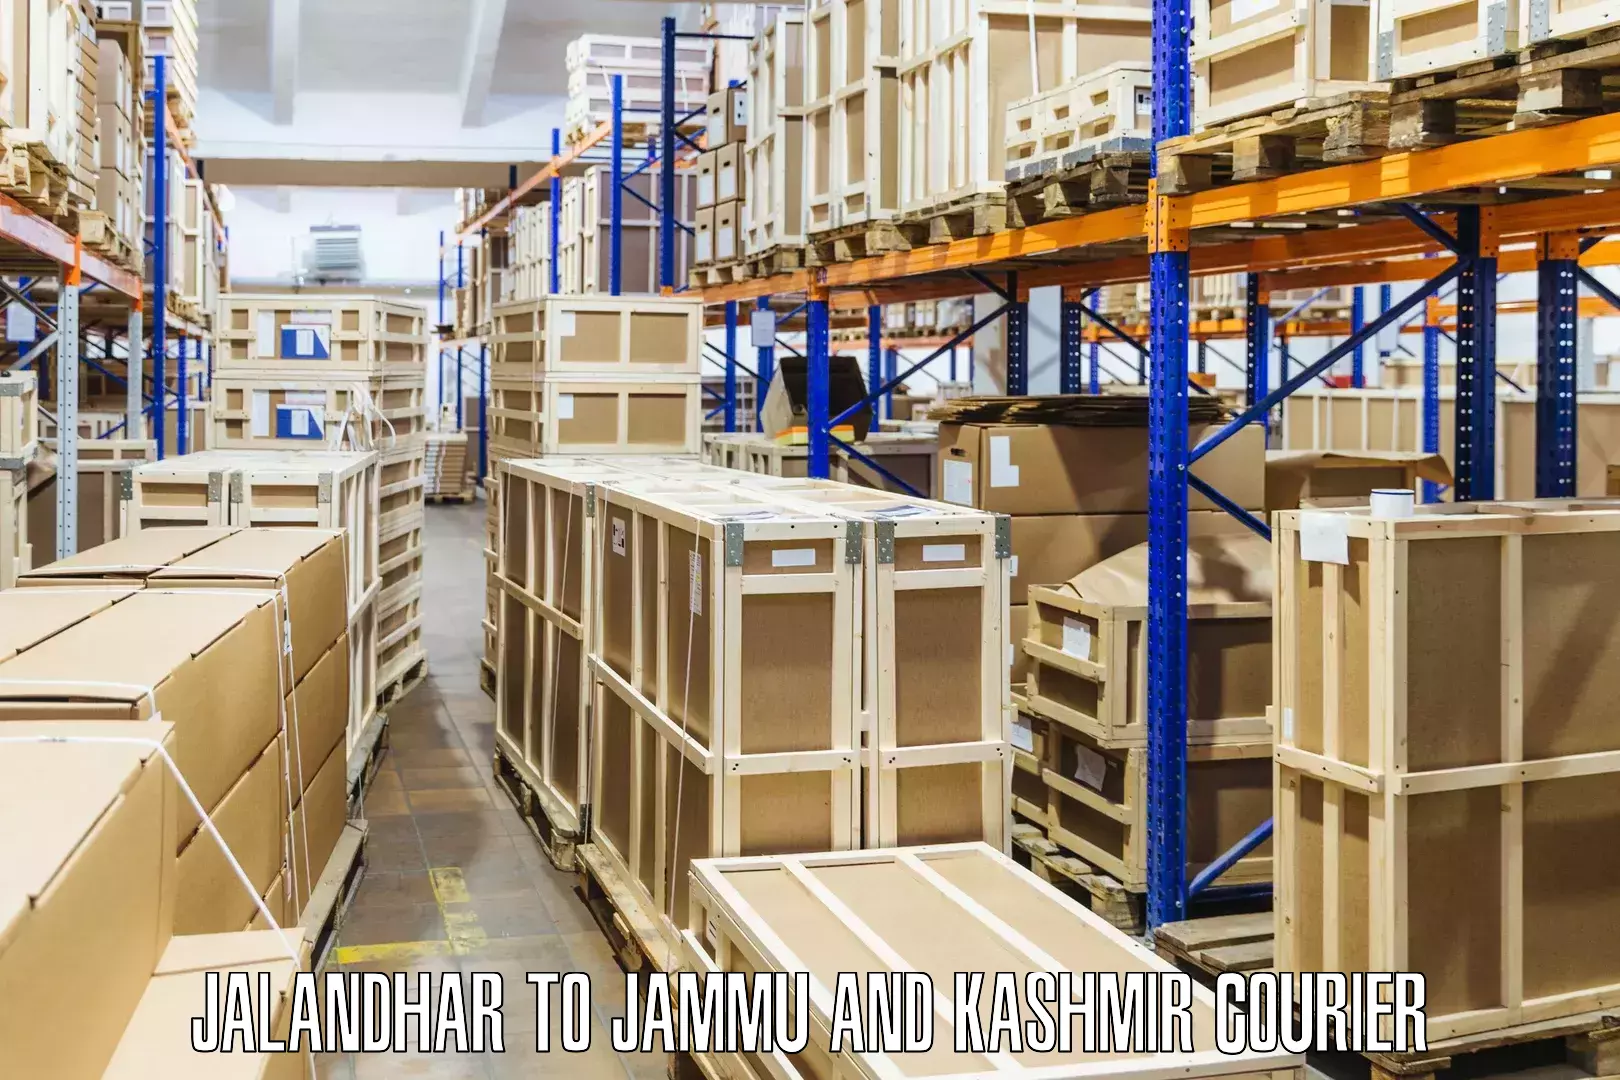 Courier service efficiency Jalandhar to Rajouri